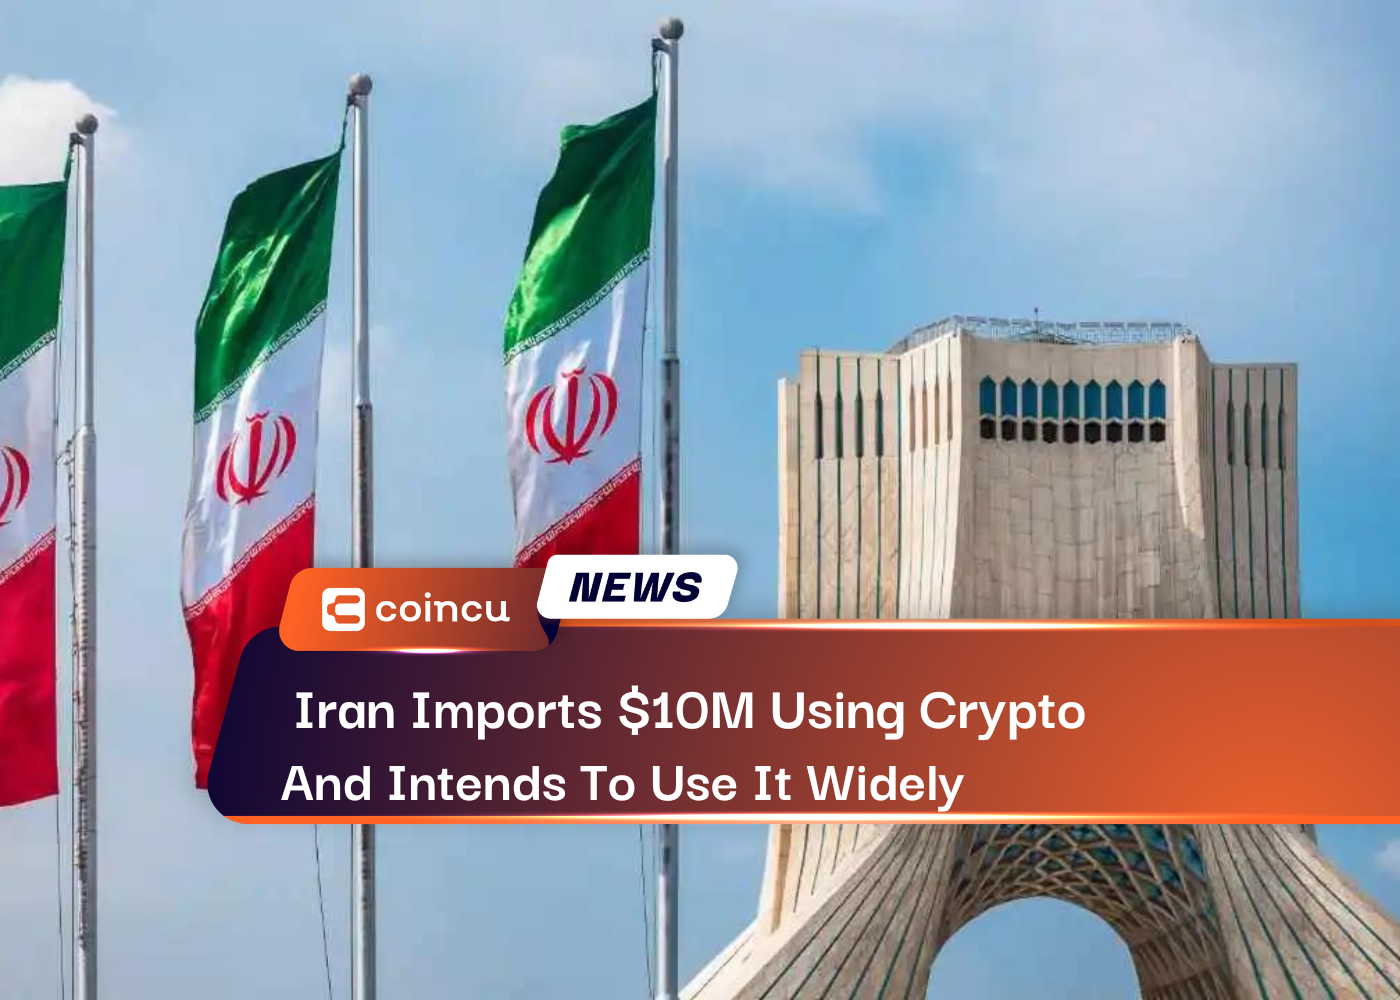 Iran Imports 10M Using Crypto